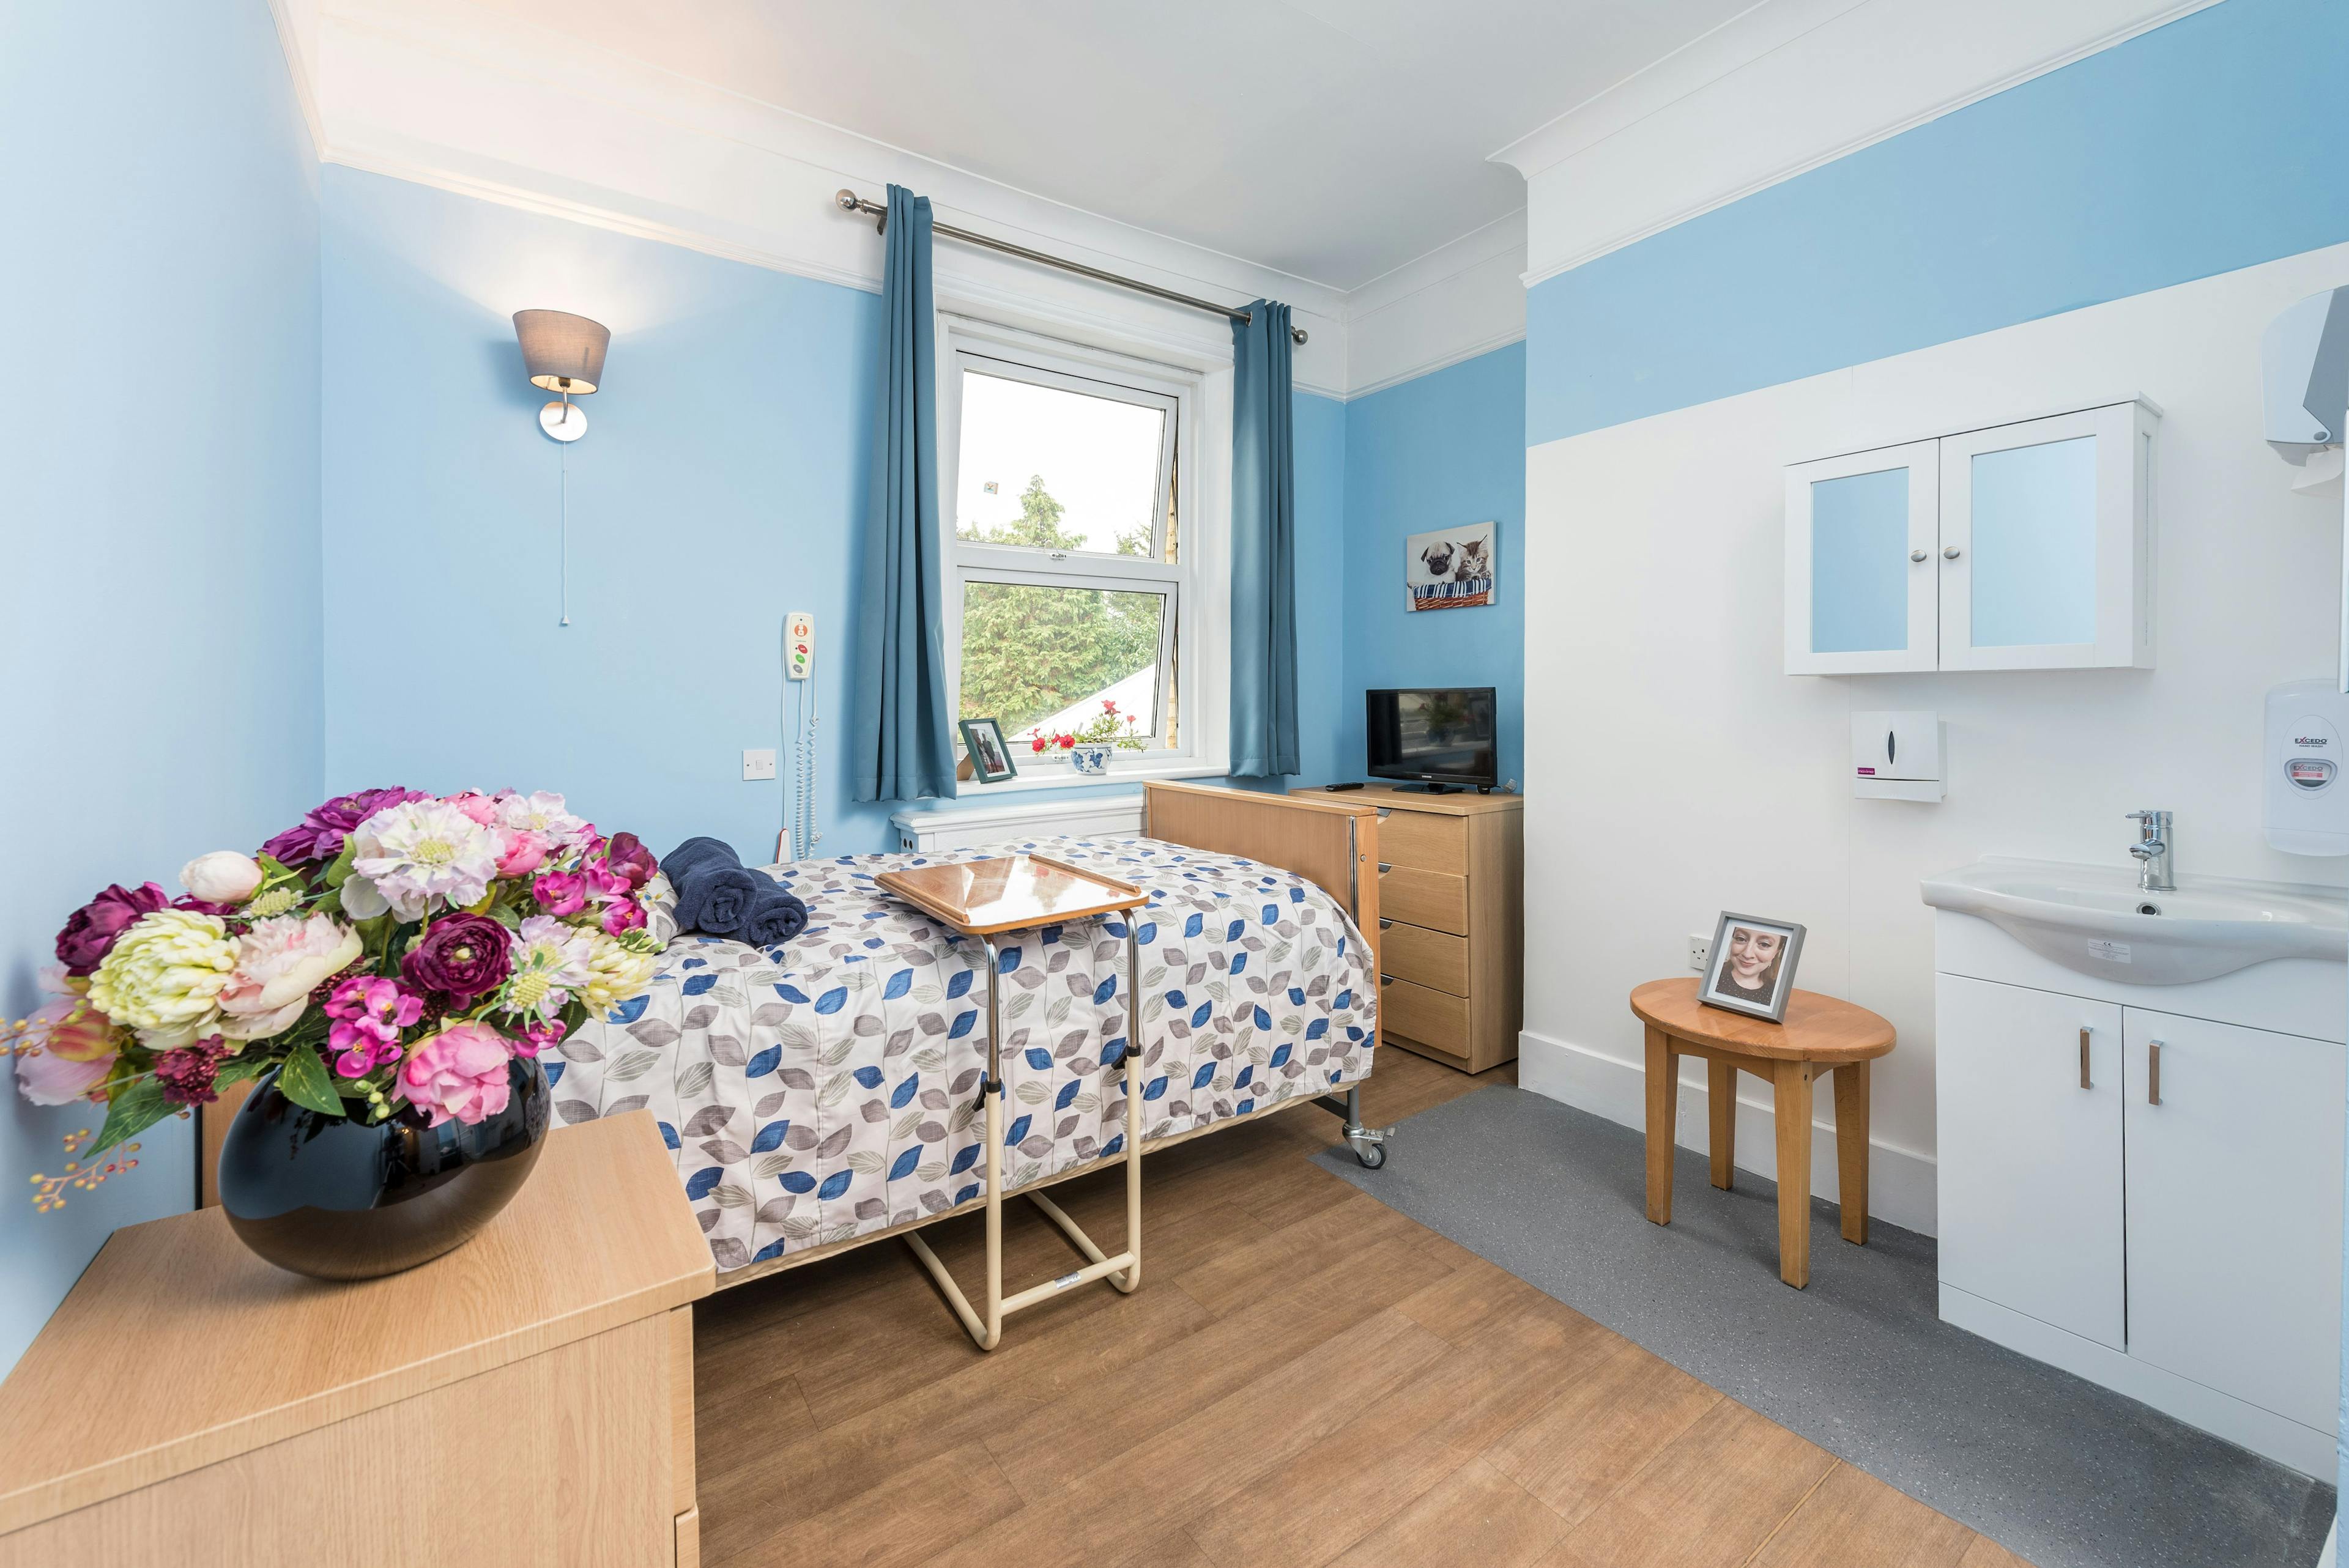 Bedroom of The Cedars care home in Barnet, London